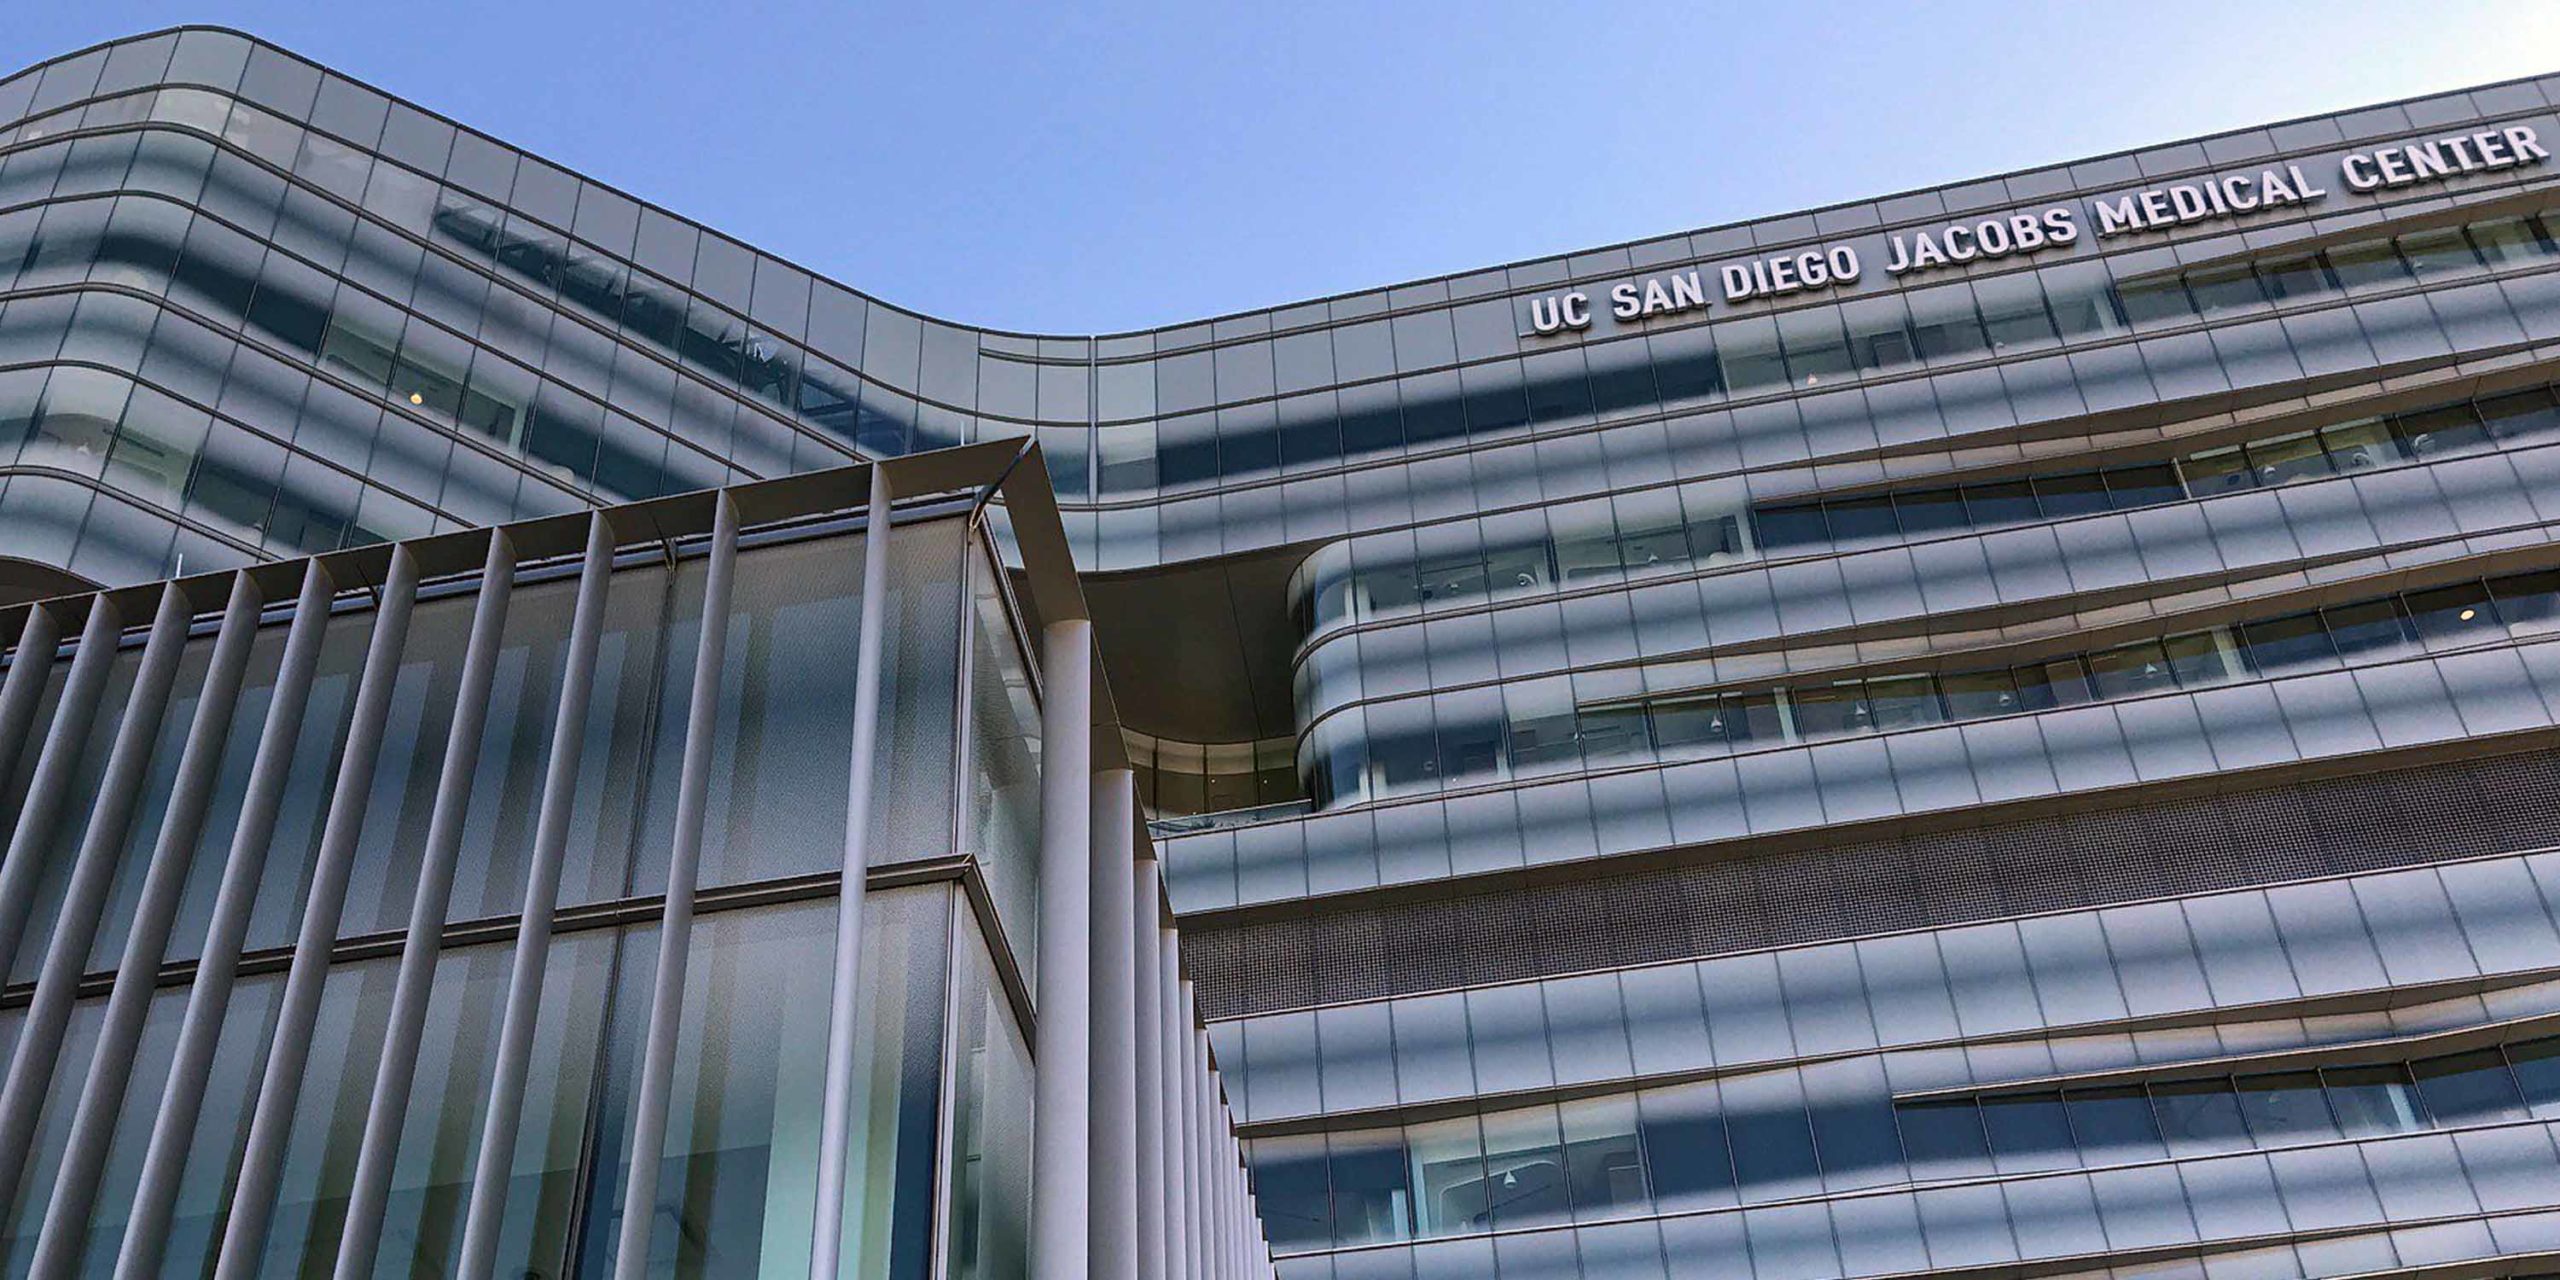 University of California San Diego: Jacobs Medical Center header image #3